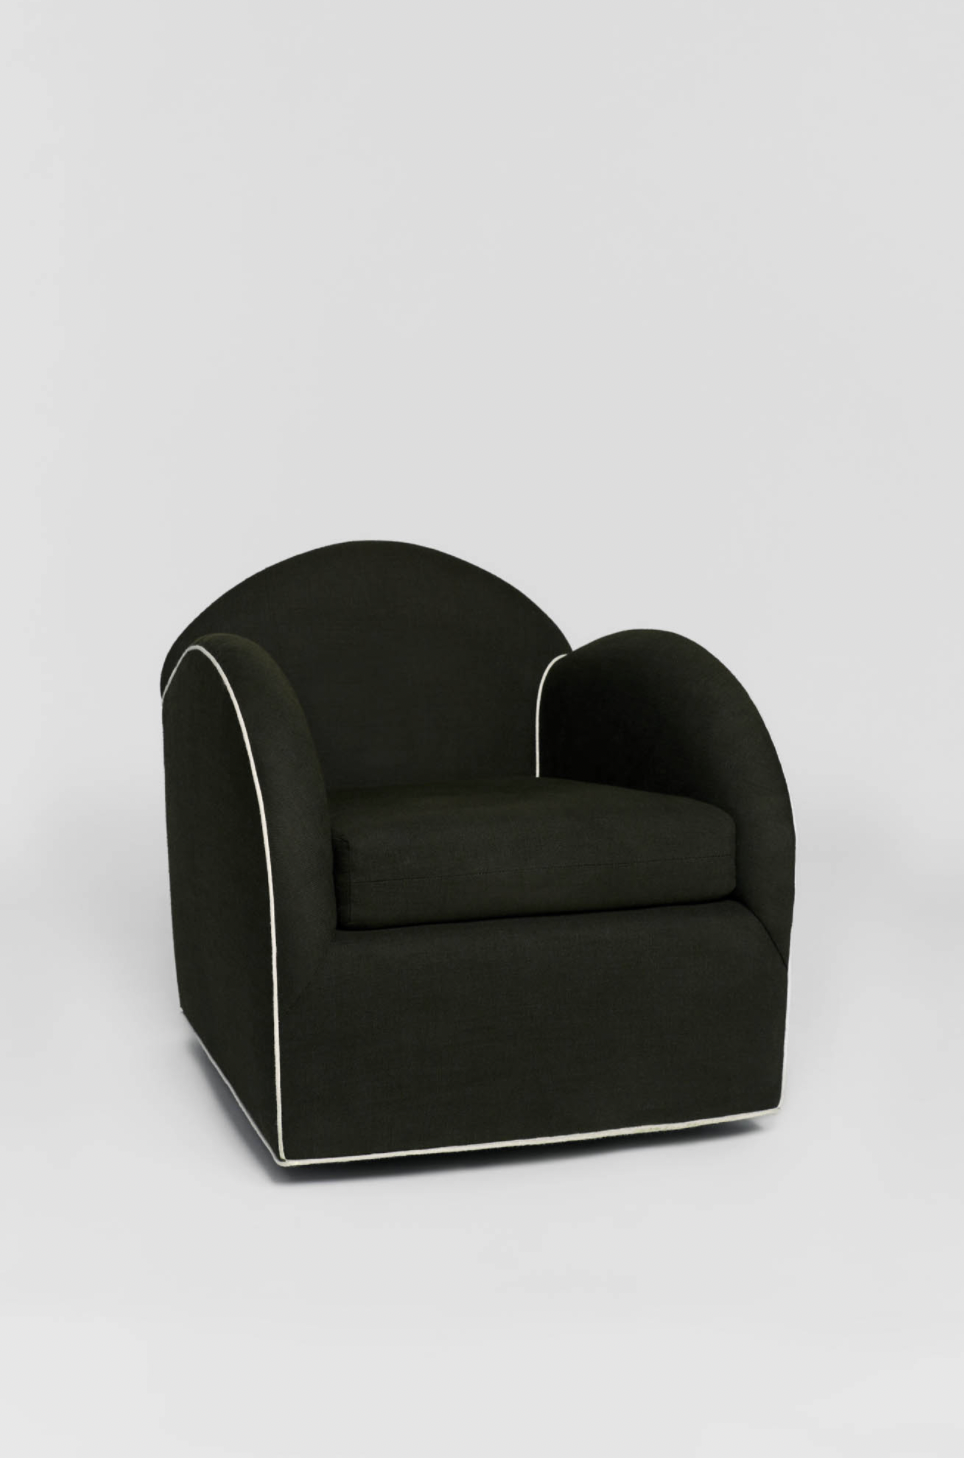 No. 276 Lounge Chair